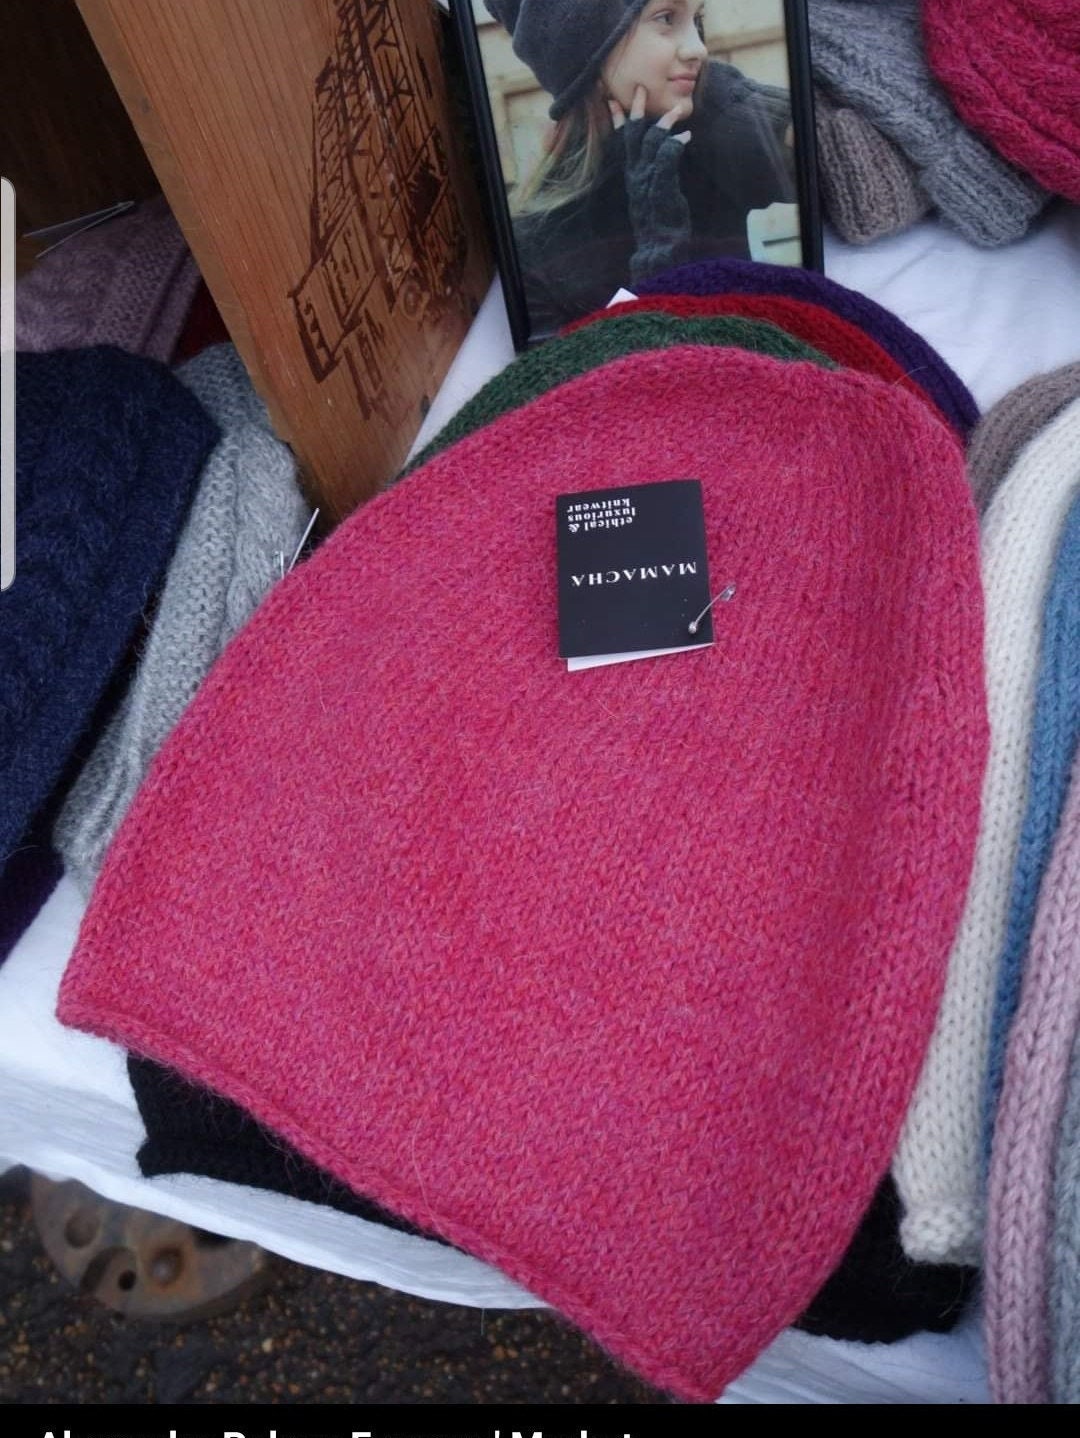 Alpaca Slouch Beanie, Hand knitted, 100% Alpaca Wool Toque, Winter Alpaca Wool Slouchy Hat, Ethical, Plastic Free, Fair trade gift, Mamacha